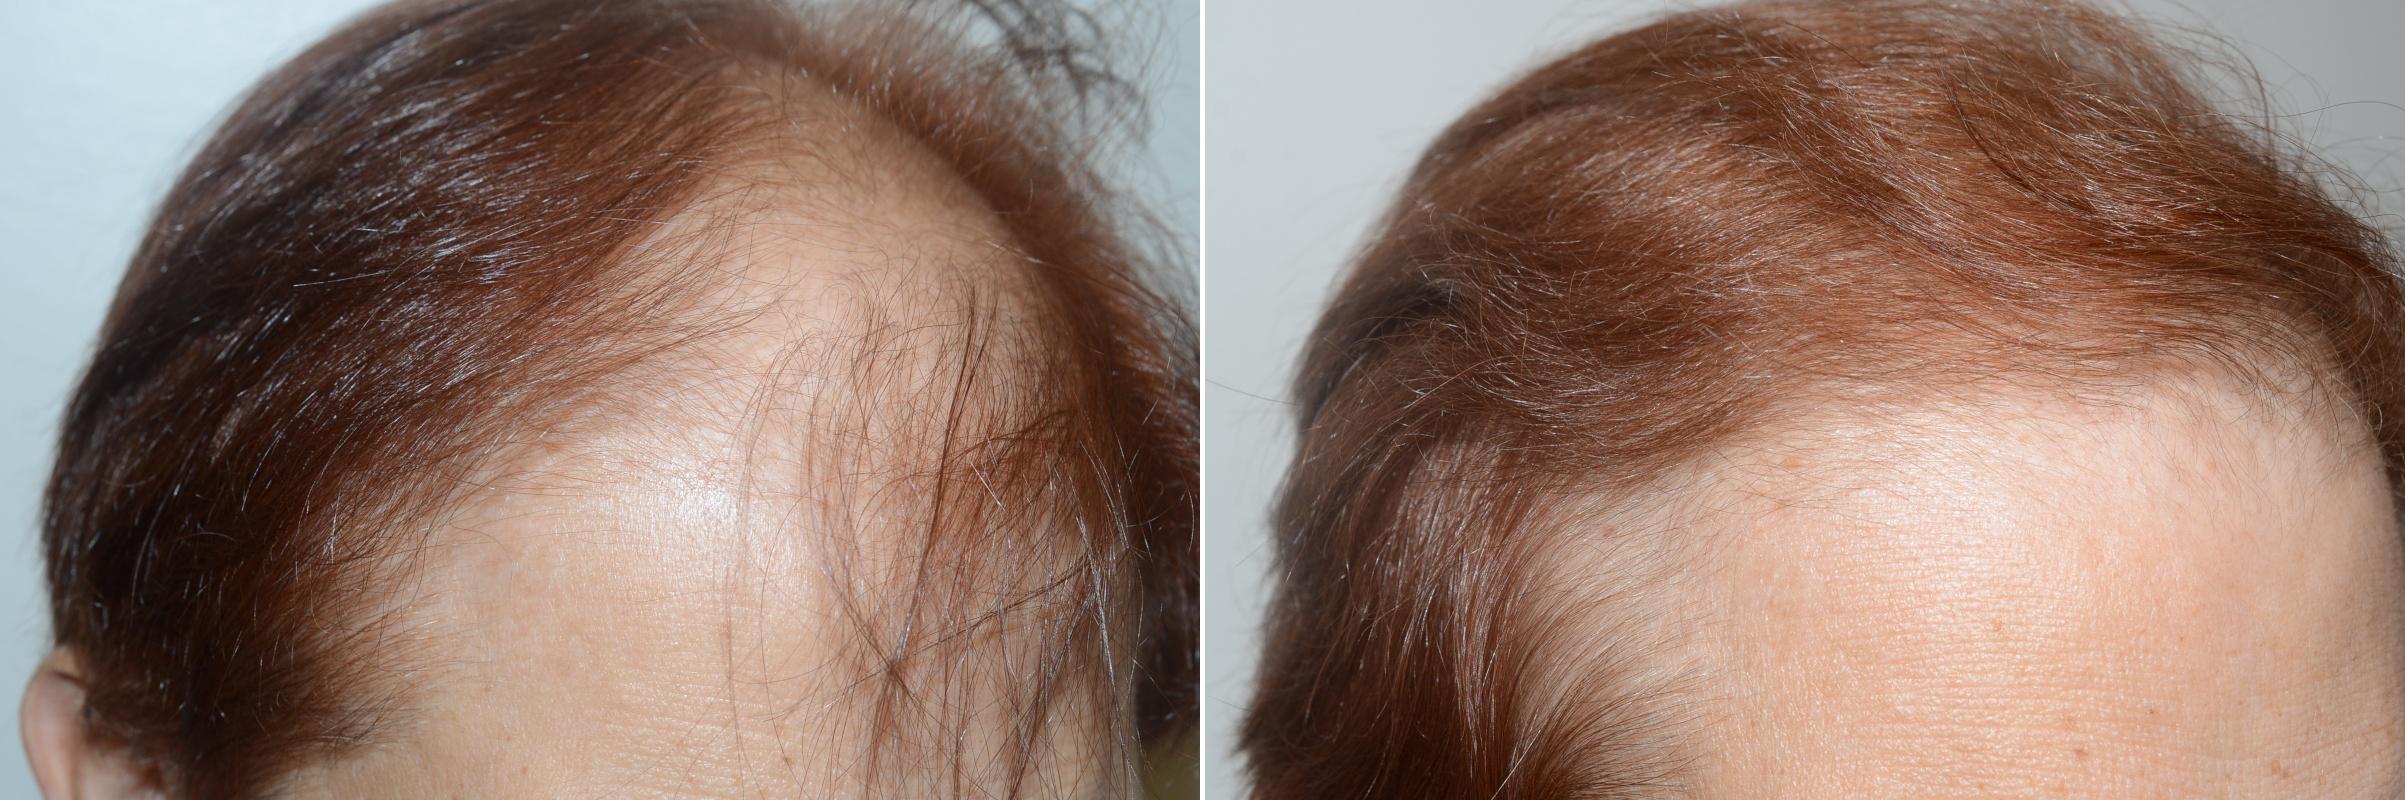 Hair Transplants For Women Photos Miami Fl Patient59153 8675